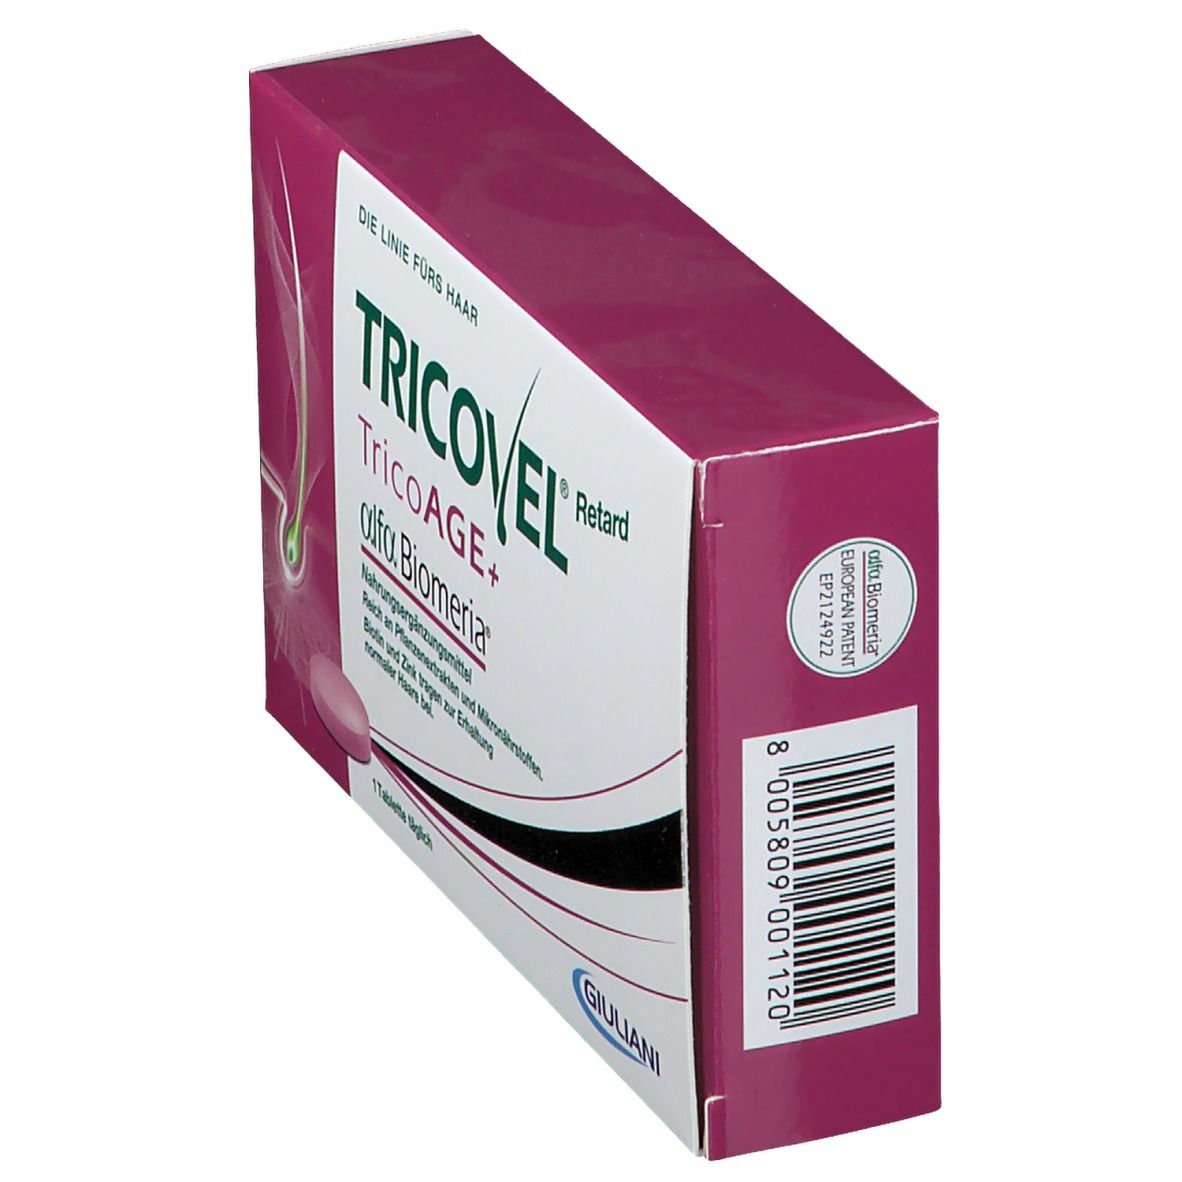 TRICOVEL® TricoAGE+ Retard Tabletten